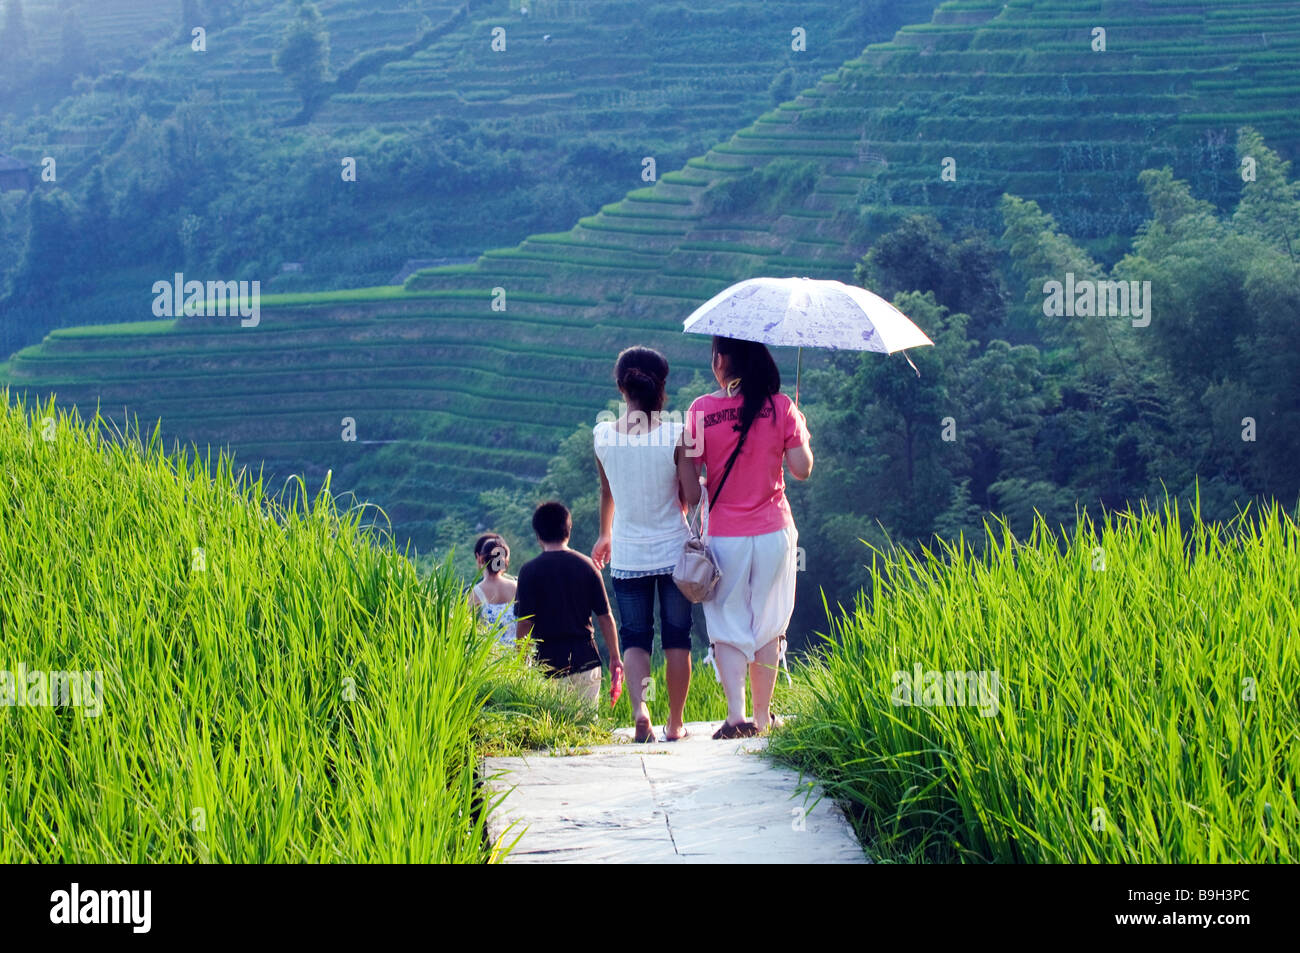 Cina, provincia di Guangxi, Longsheng Dragon's Backbone terrazze di riso nei pressi di Guilin. I turisti a piedi attraverso i campi di riso. Foto Stock